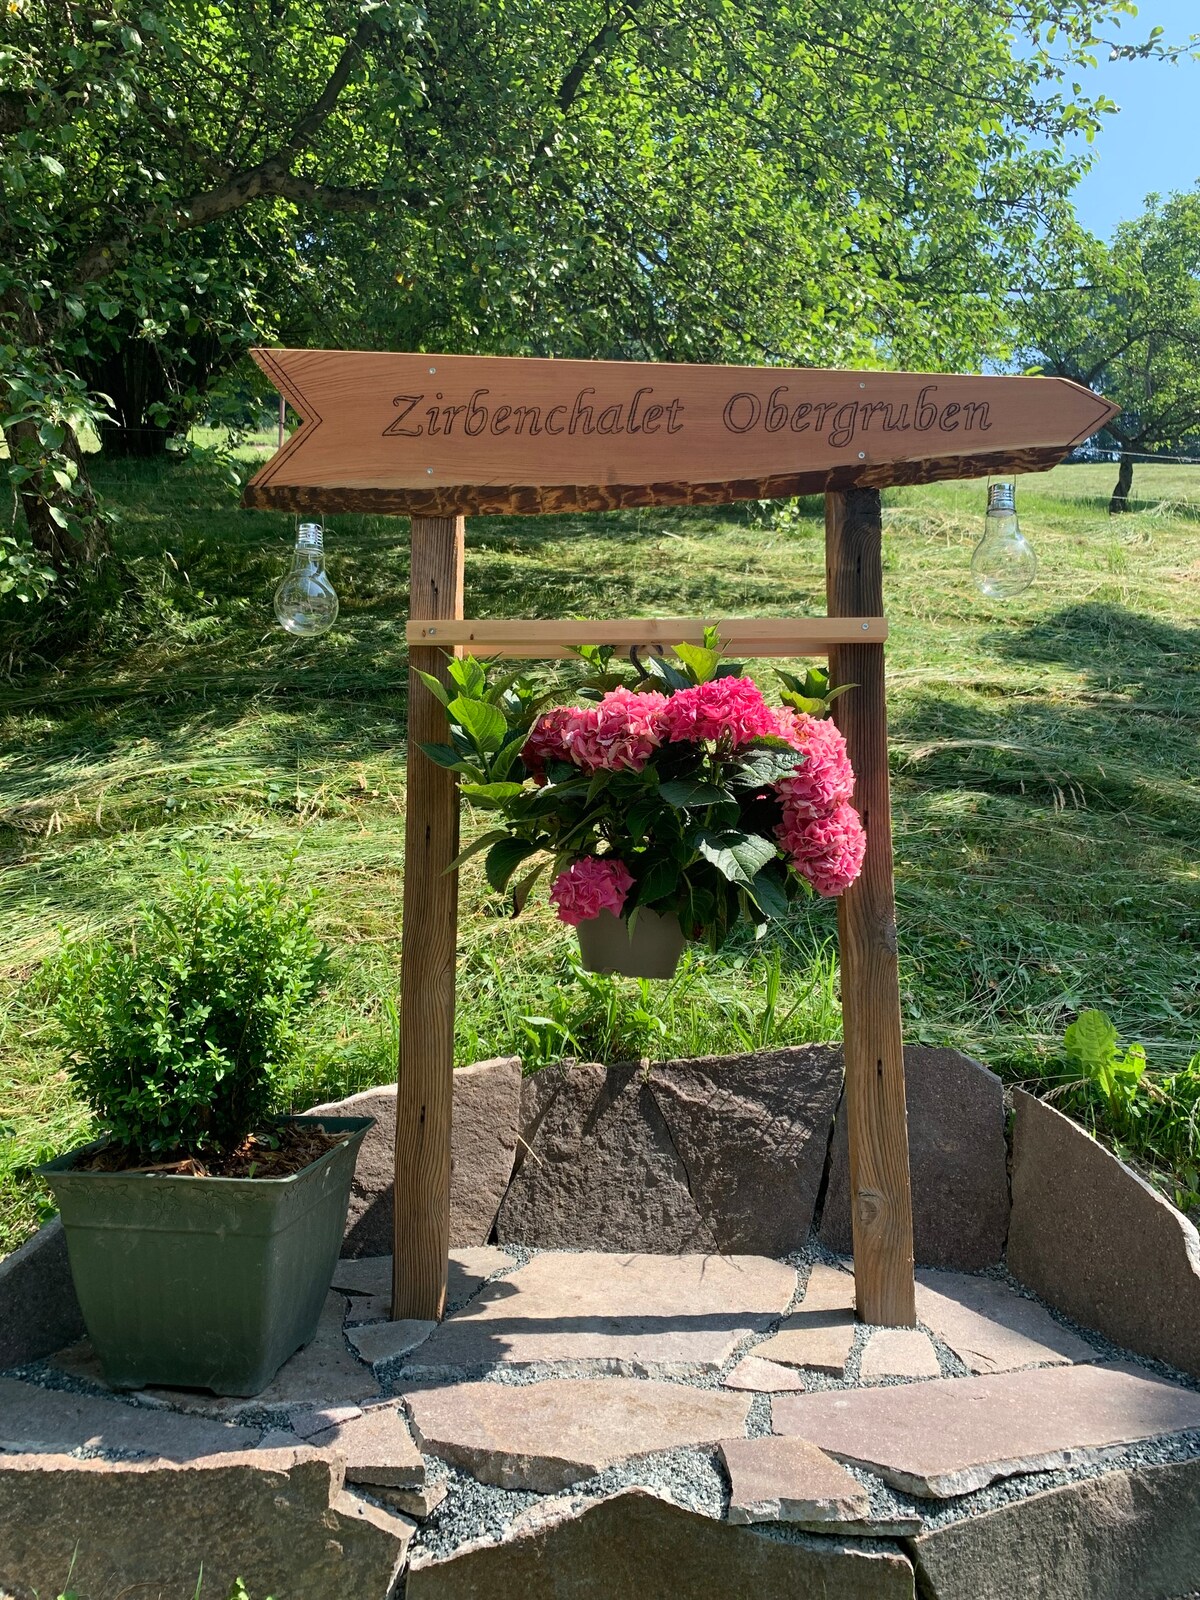 Zirbenchalet Obergruben in Bad Mehrn, Alpbachtal